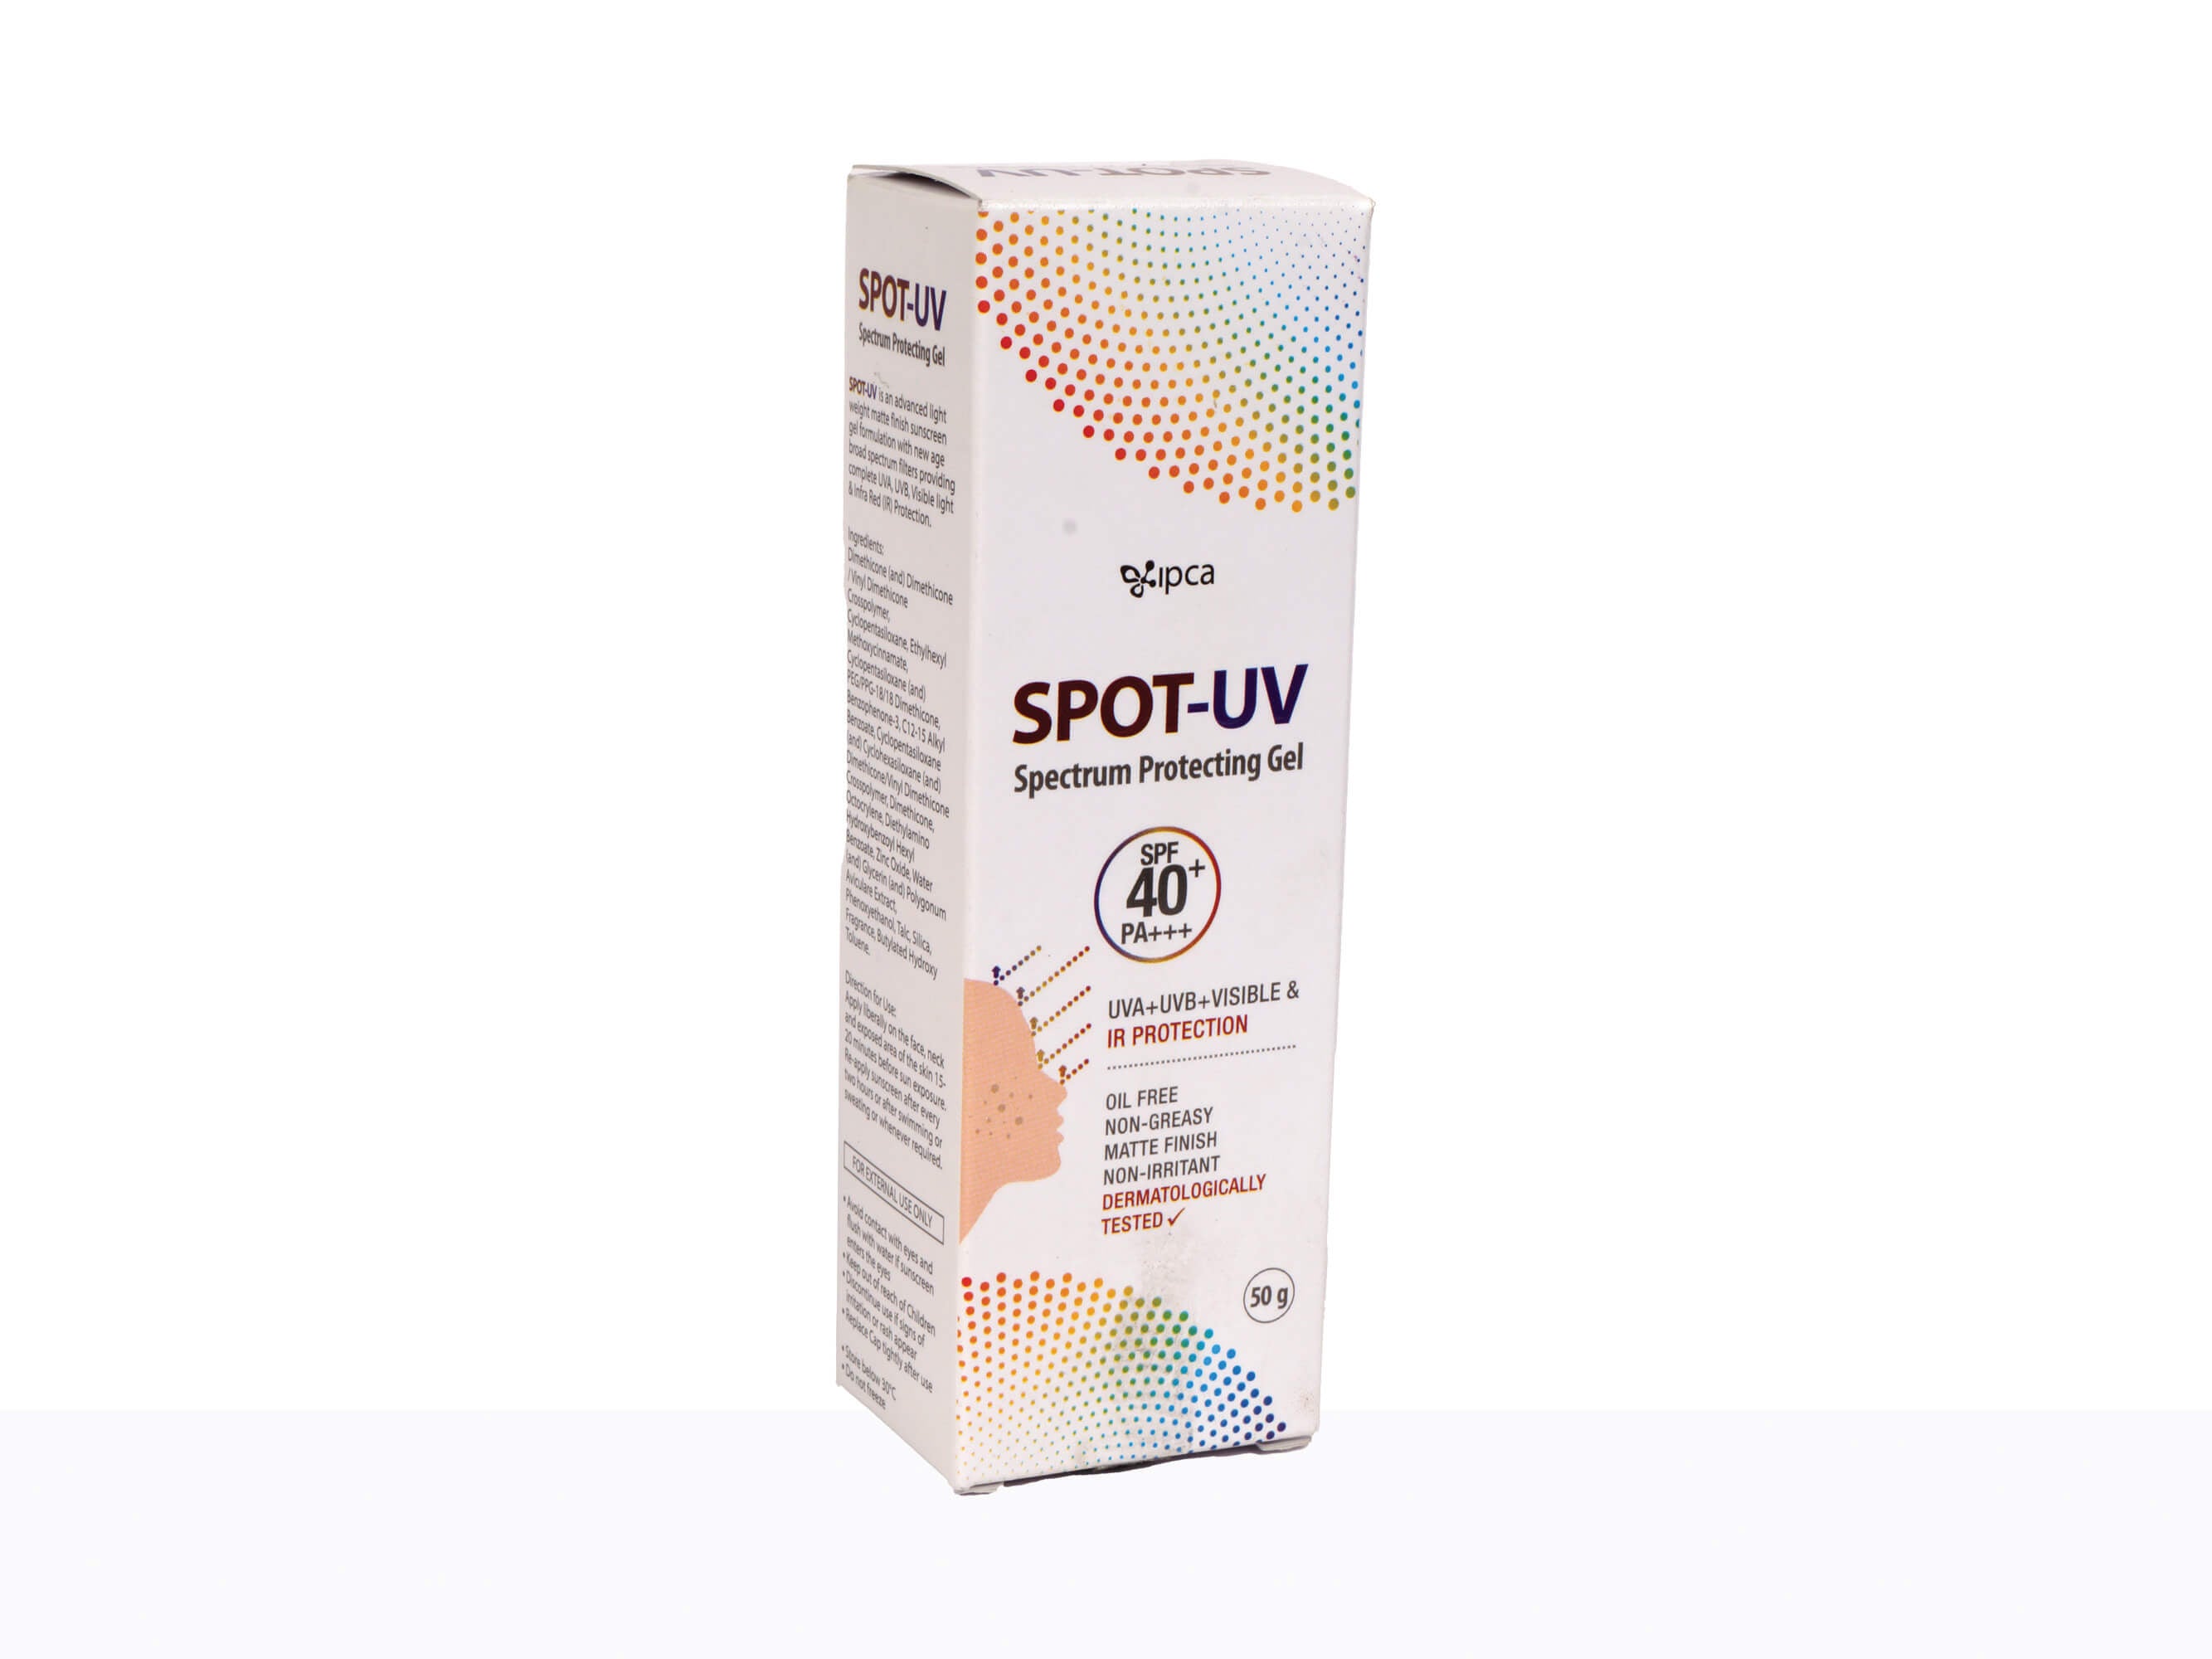 IPCA Spot-UV Spectrum Protecting Gel SPF 40+/PA+++-Clinikally